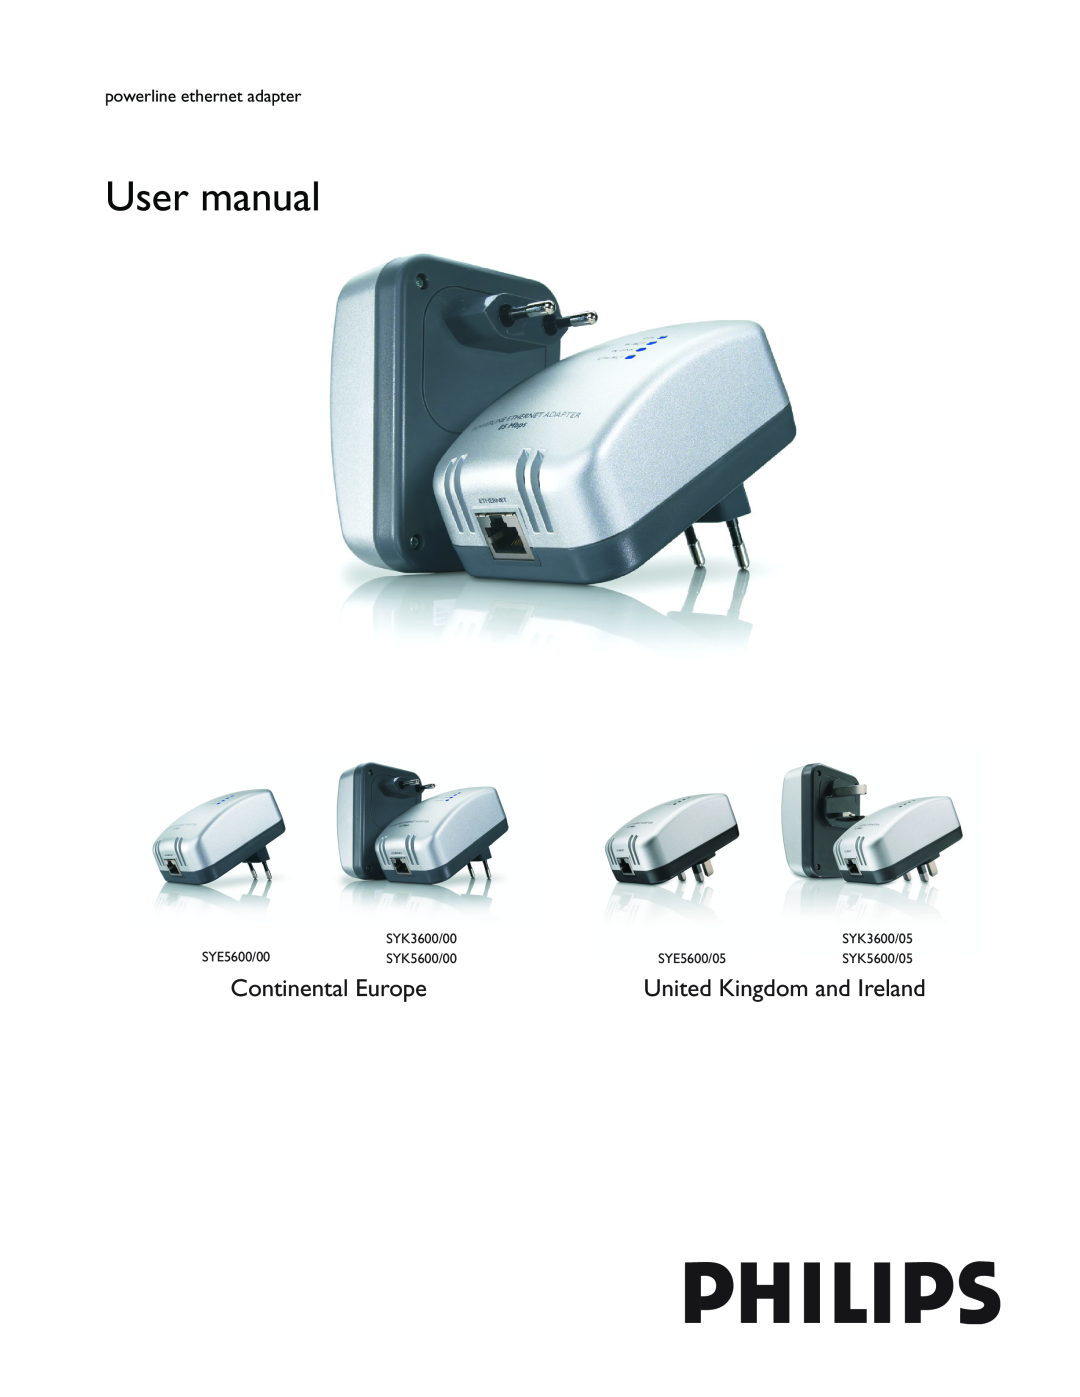 Philips SYE5600 user manual User manual, Continental Europe, United Kingdom and Ireland 